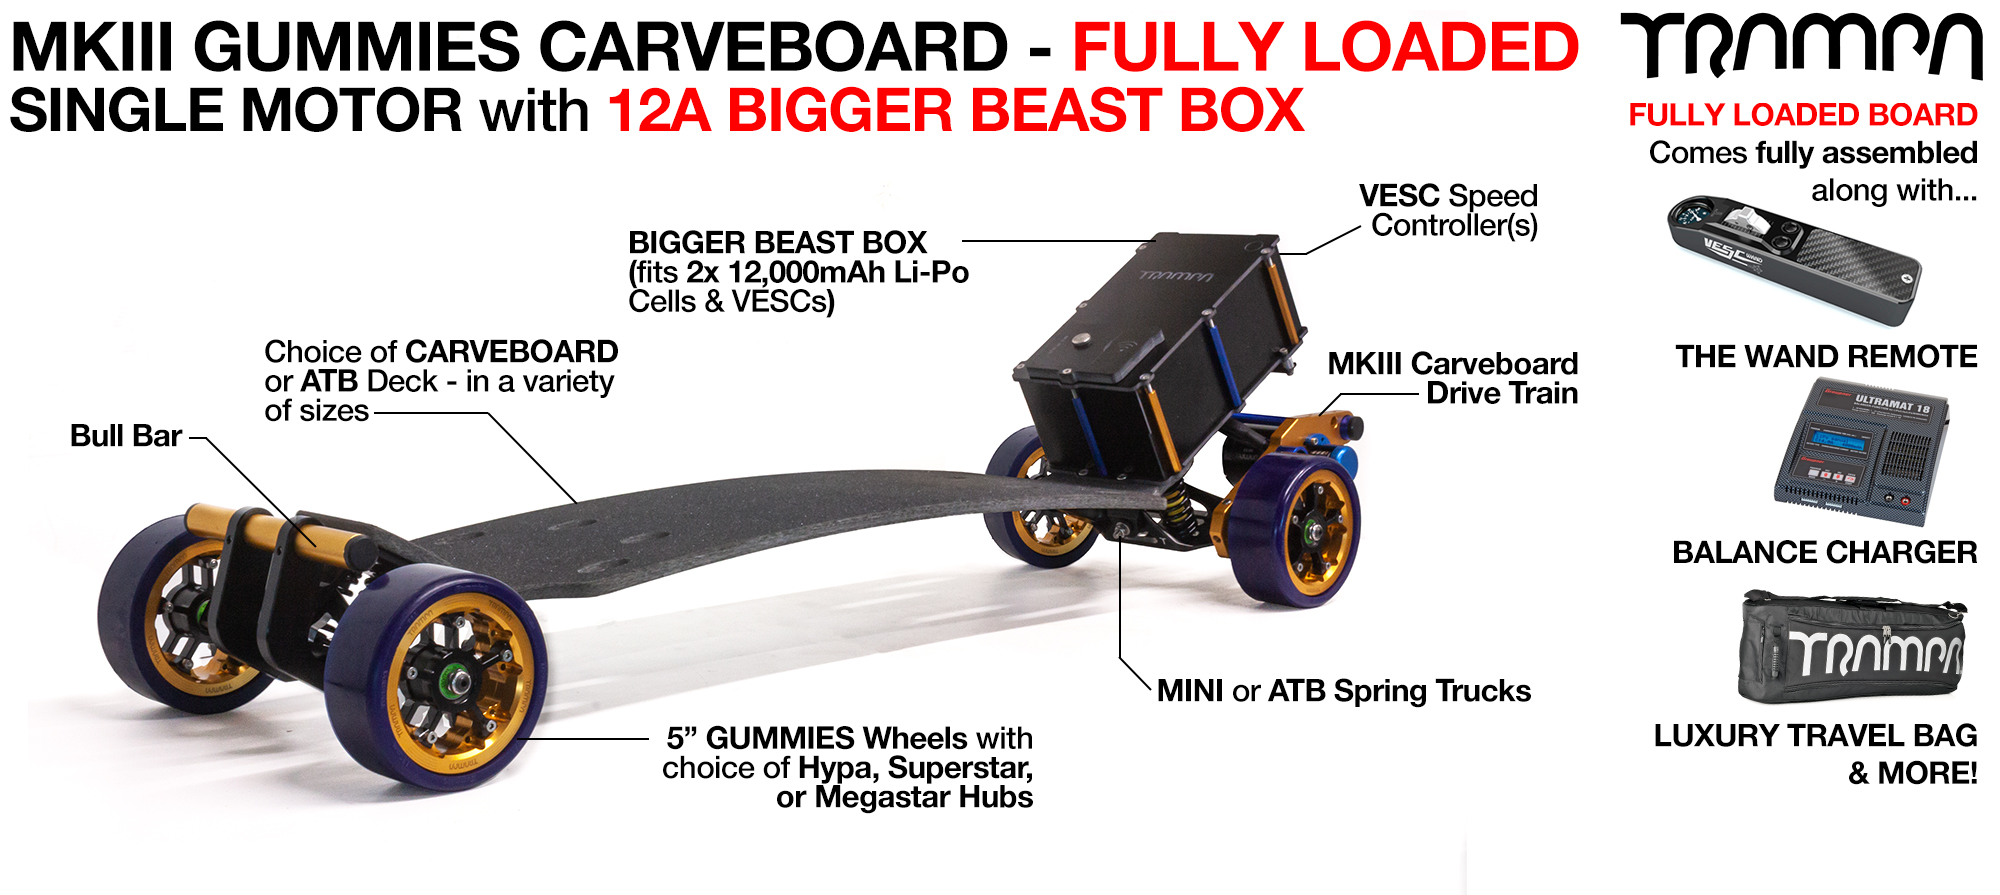 TRAMPA's MkIII Electric GUMMIES Carveboard - uses Mini Spring Trucks with MkIII Carve board Motor Mount's Custom TRAMPA hubs & 125mm GUMMIES longboard Tyres - SINGLE Motor 12A FULLY LOADED 